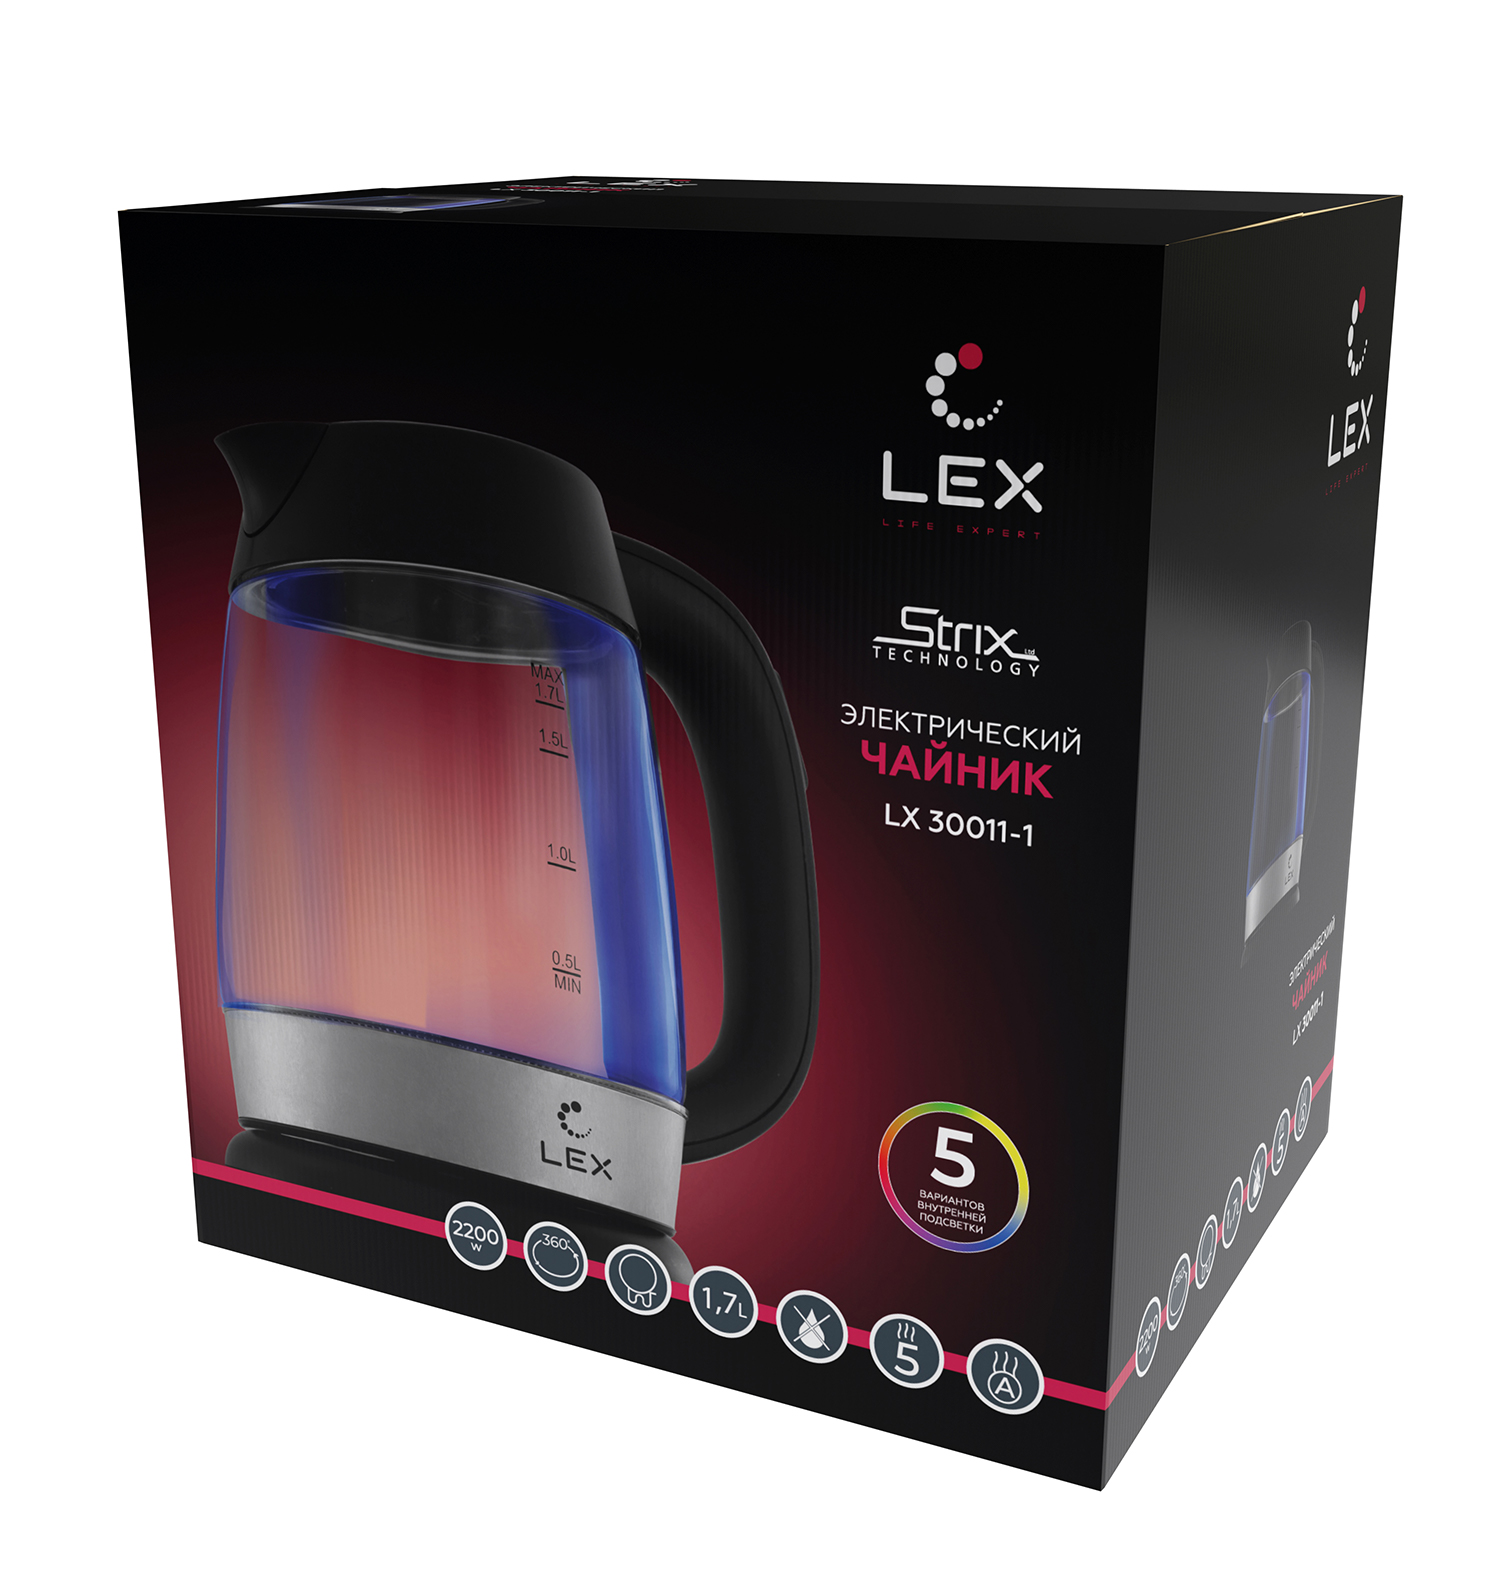 LEX LX 30011-1